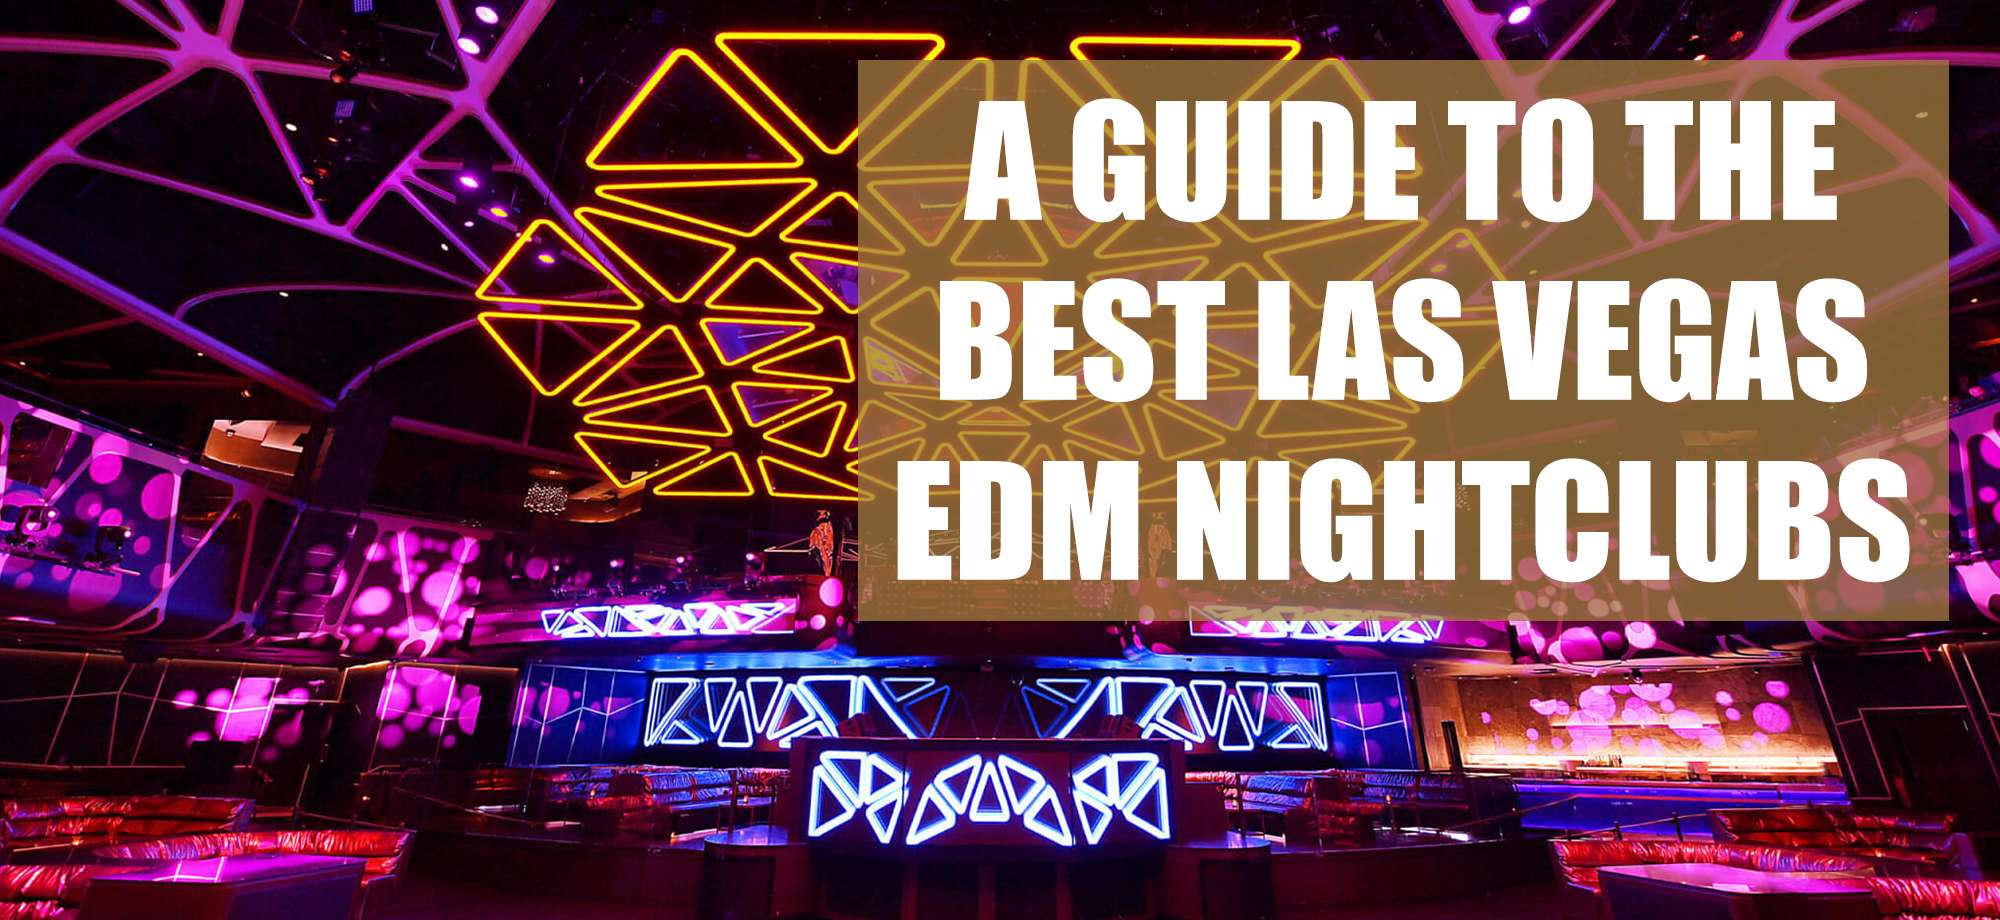 The Best Nightclubs in Las Vegas